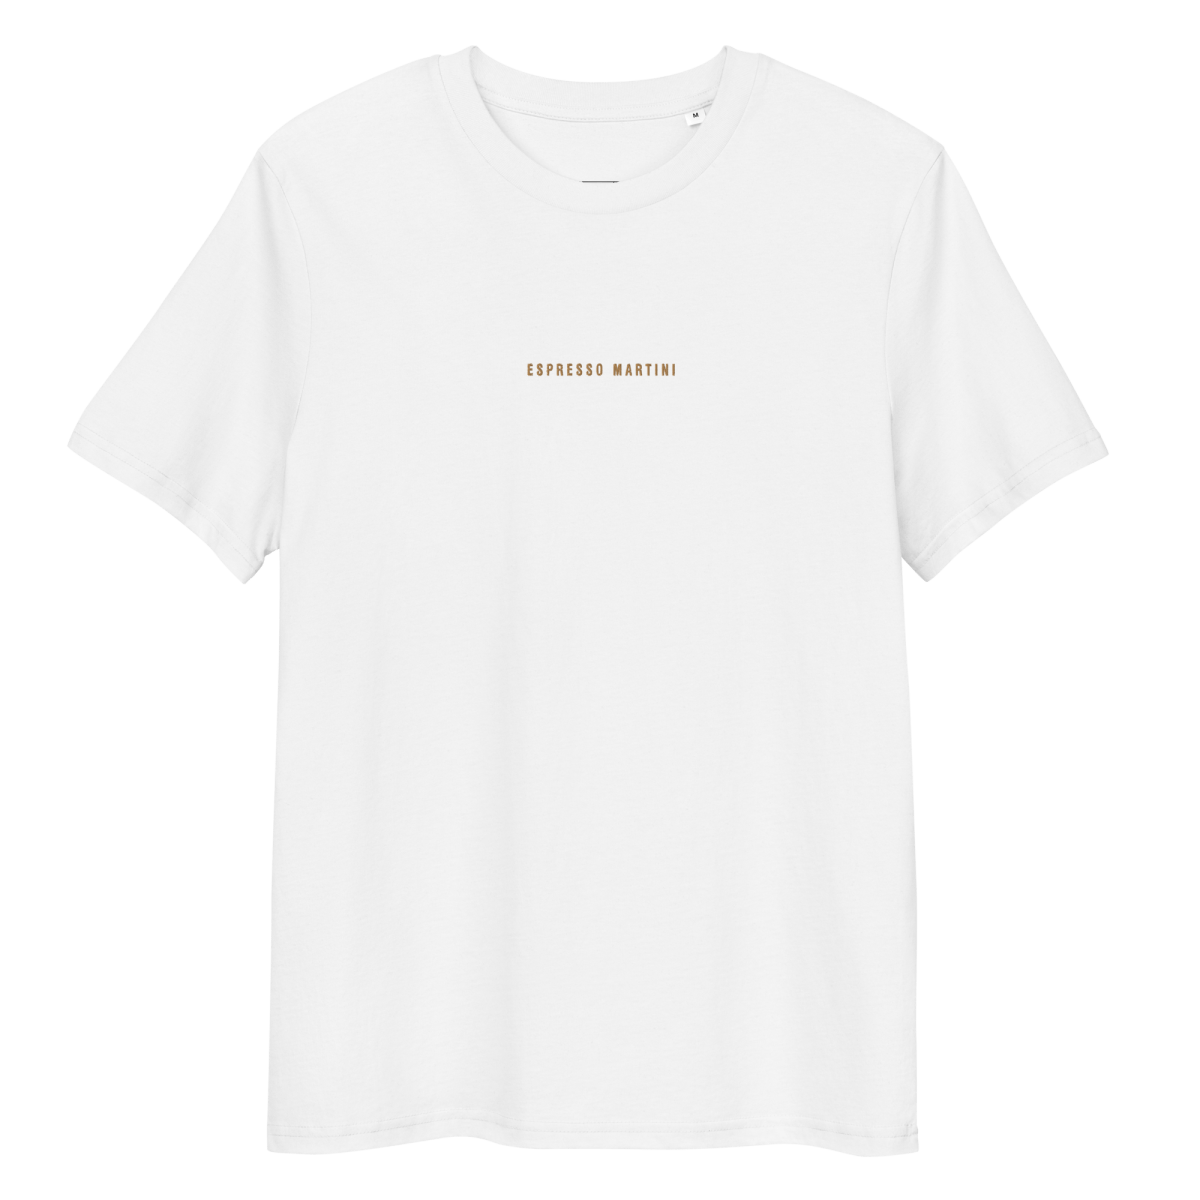 The Espresso Martini organic t-shirt